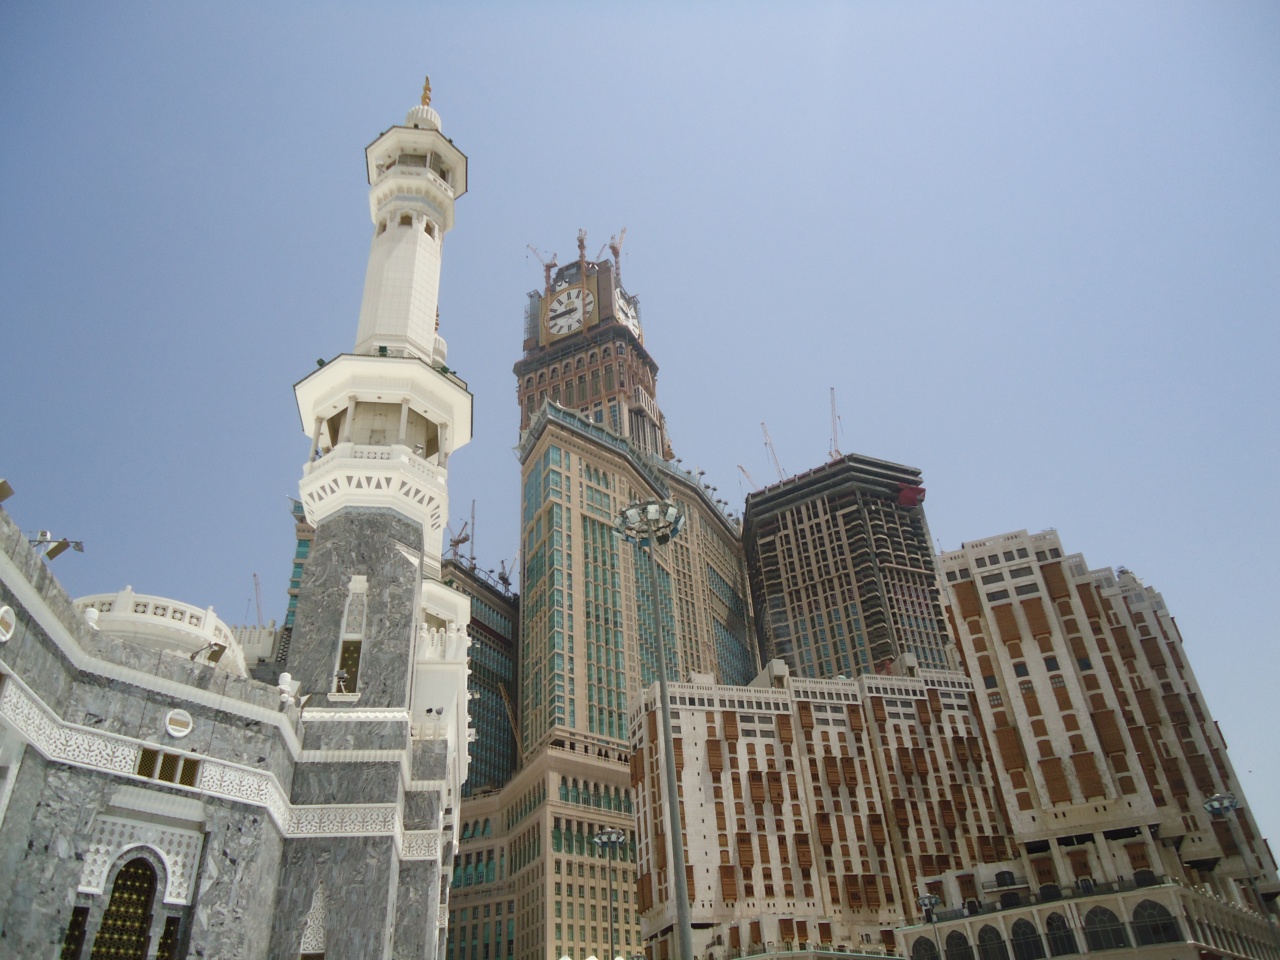 Башня в мекке. Абрадж Аль-Бейт Мекка. Часовая башня Абрадж Аль-Бейт. Часовой башне Абрадж Аль-Бейт в Мекке. Абрадж Аль-Бейт, Мекка, Саудовская Аравия, 601.